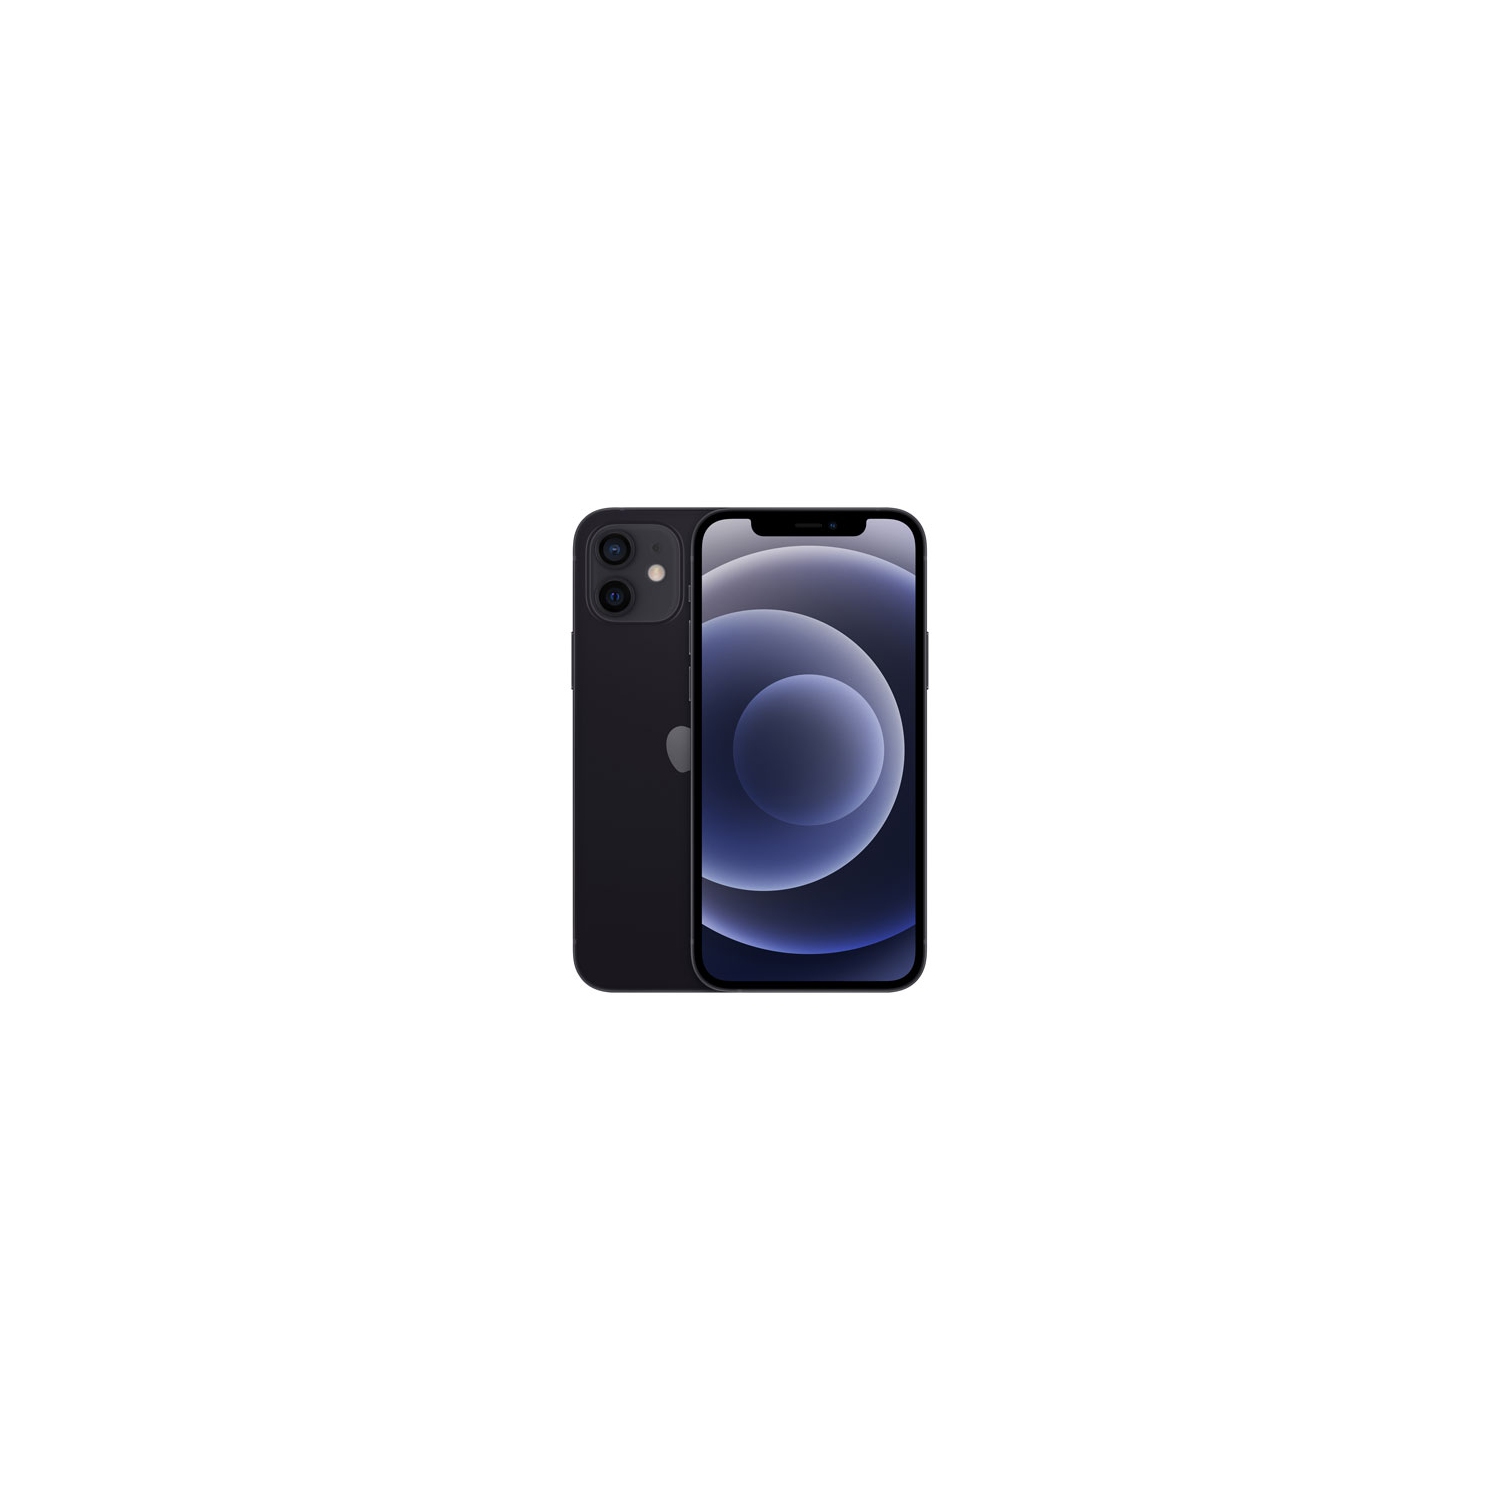 Apple iPhone 12 128GB Smartphone - Black - Unlocked - Open Box